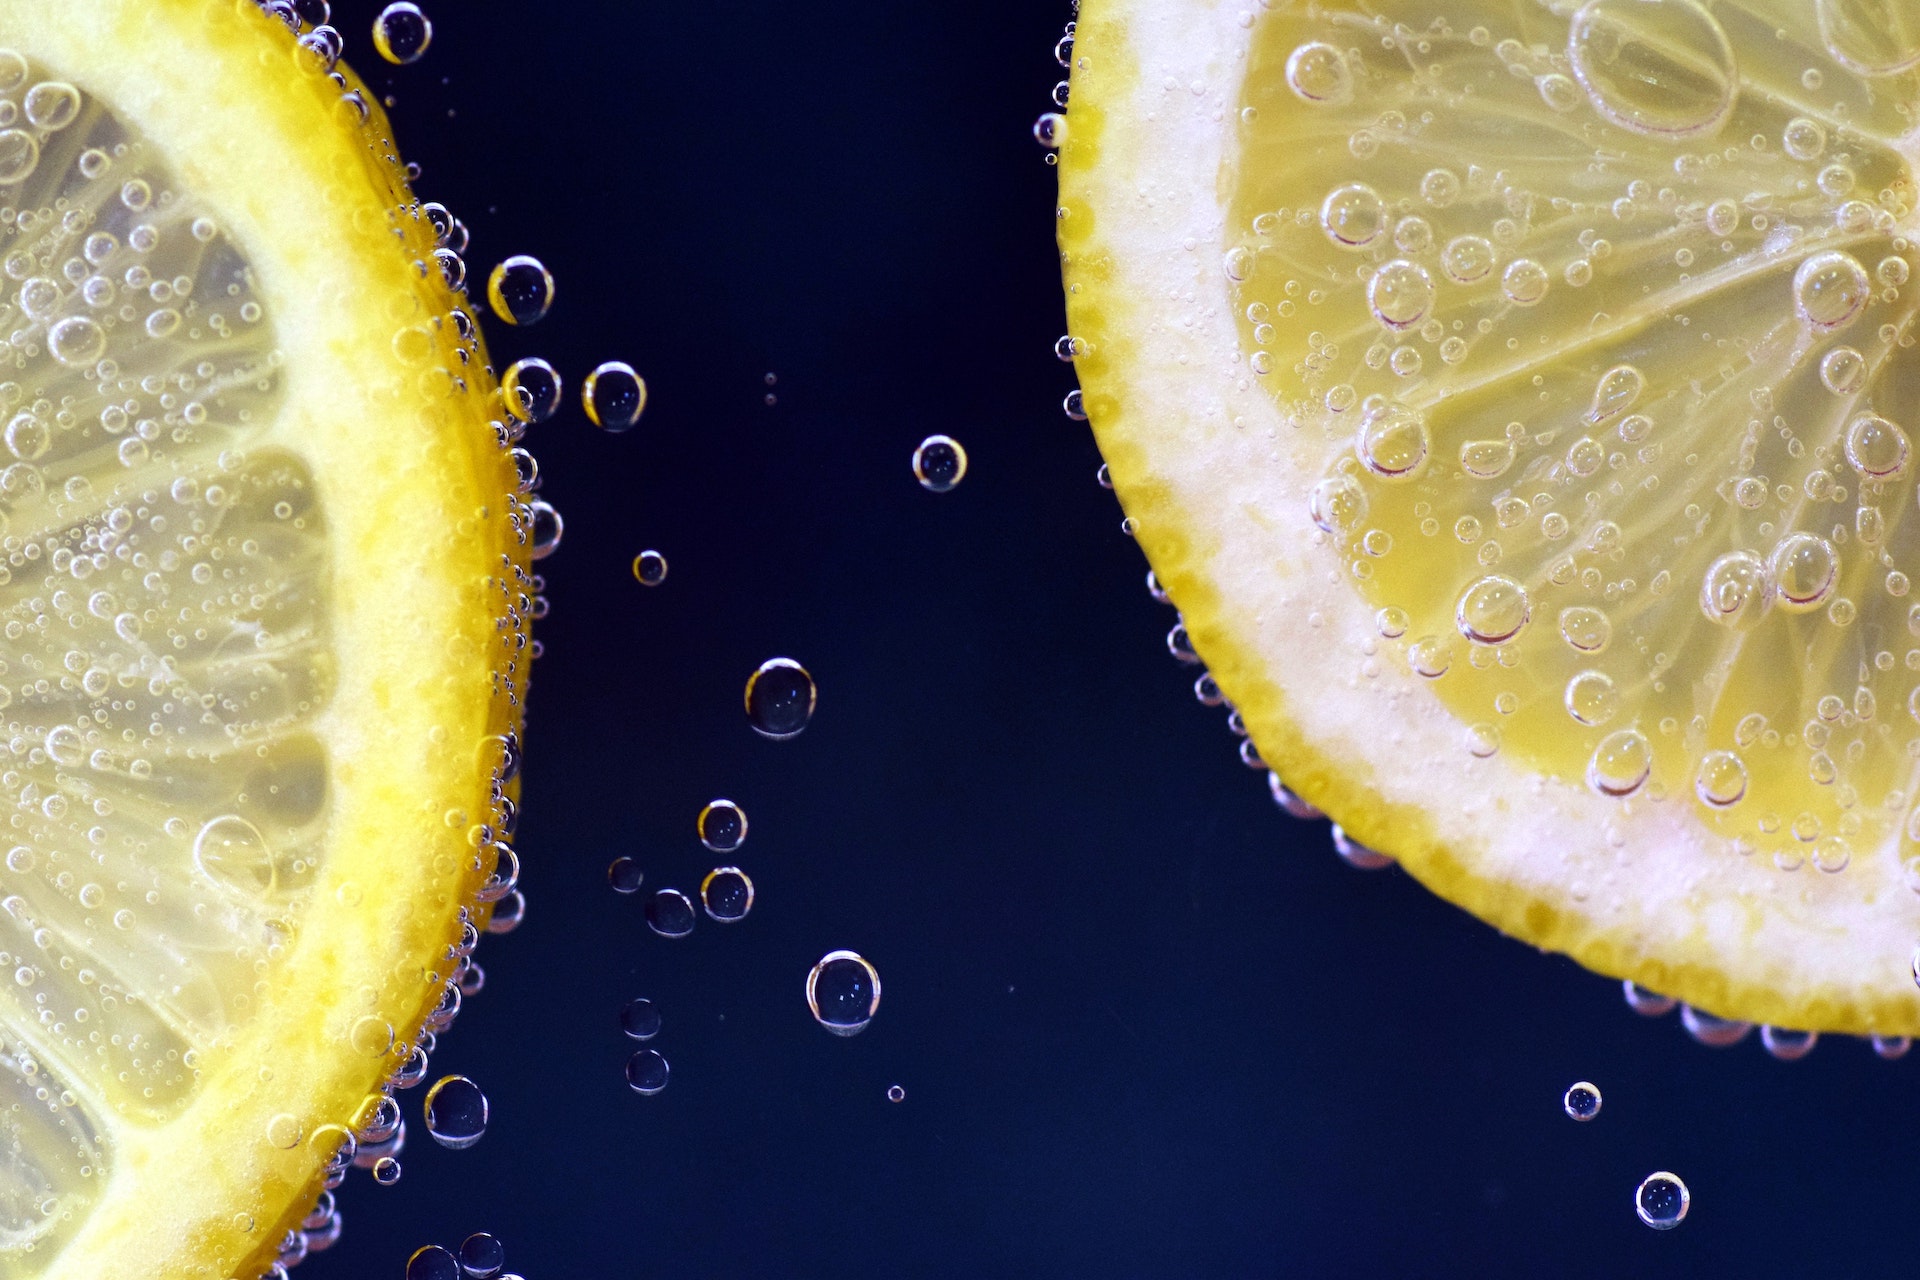 Sparkling Lemon Water